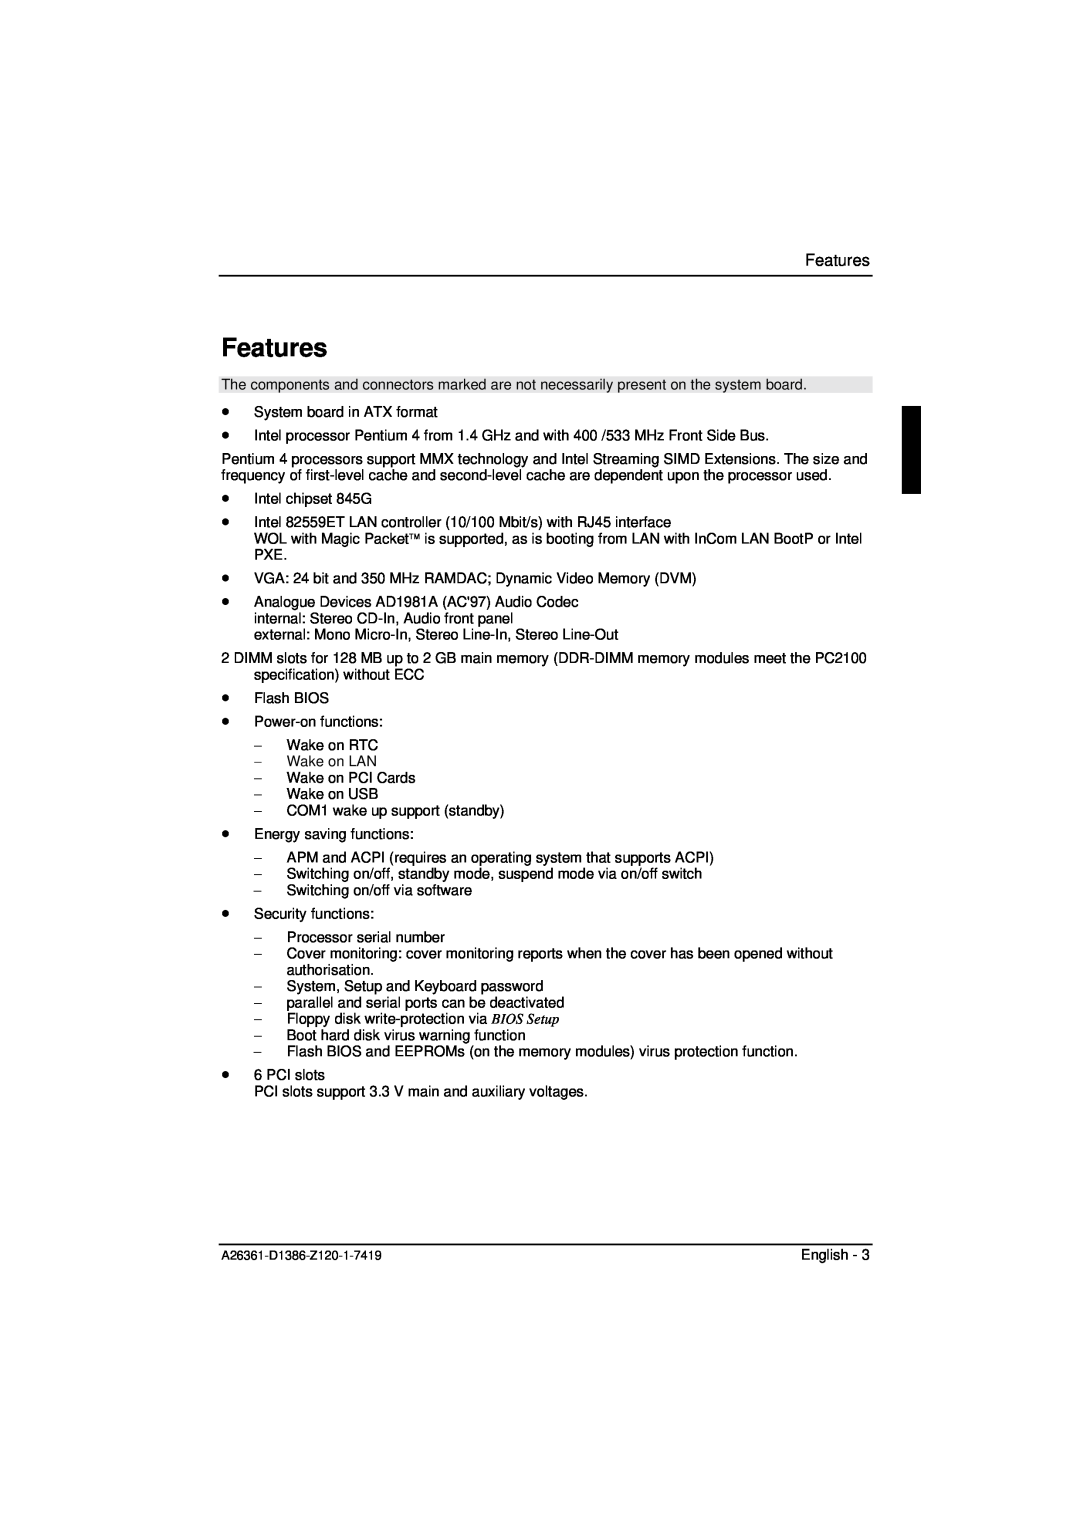 Fujitsu D1386 technical manual Features 